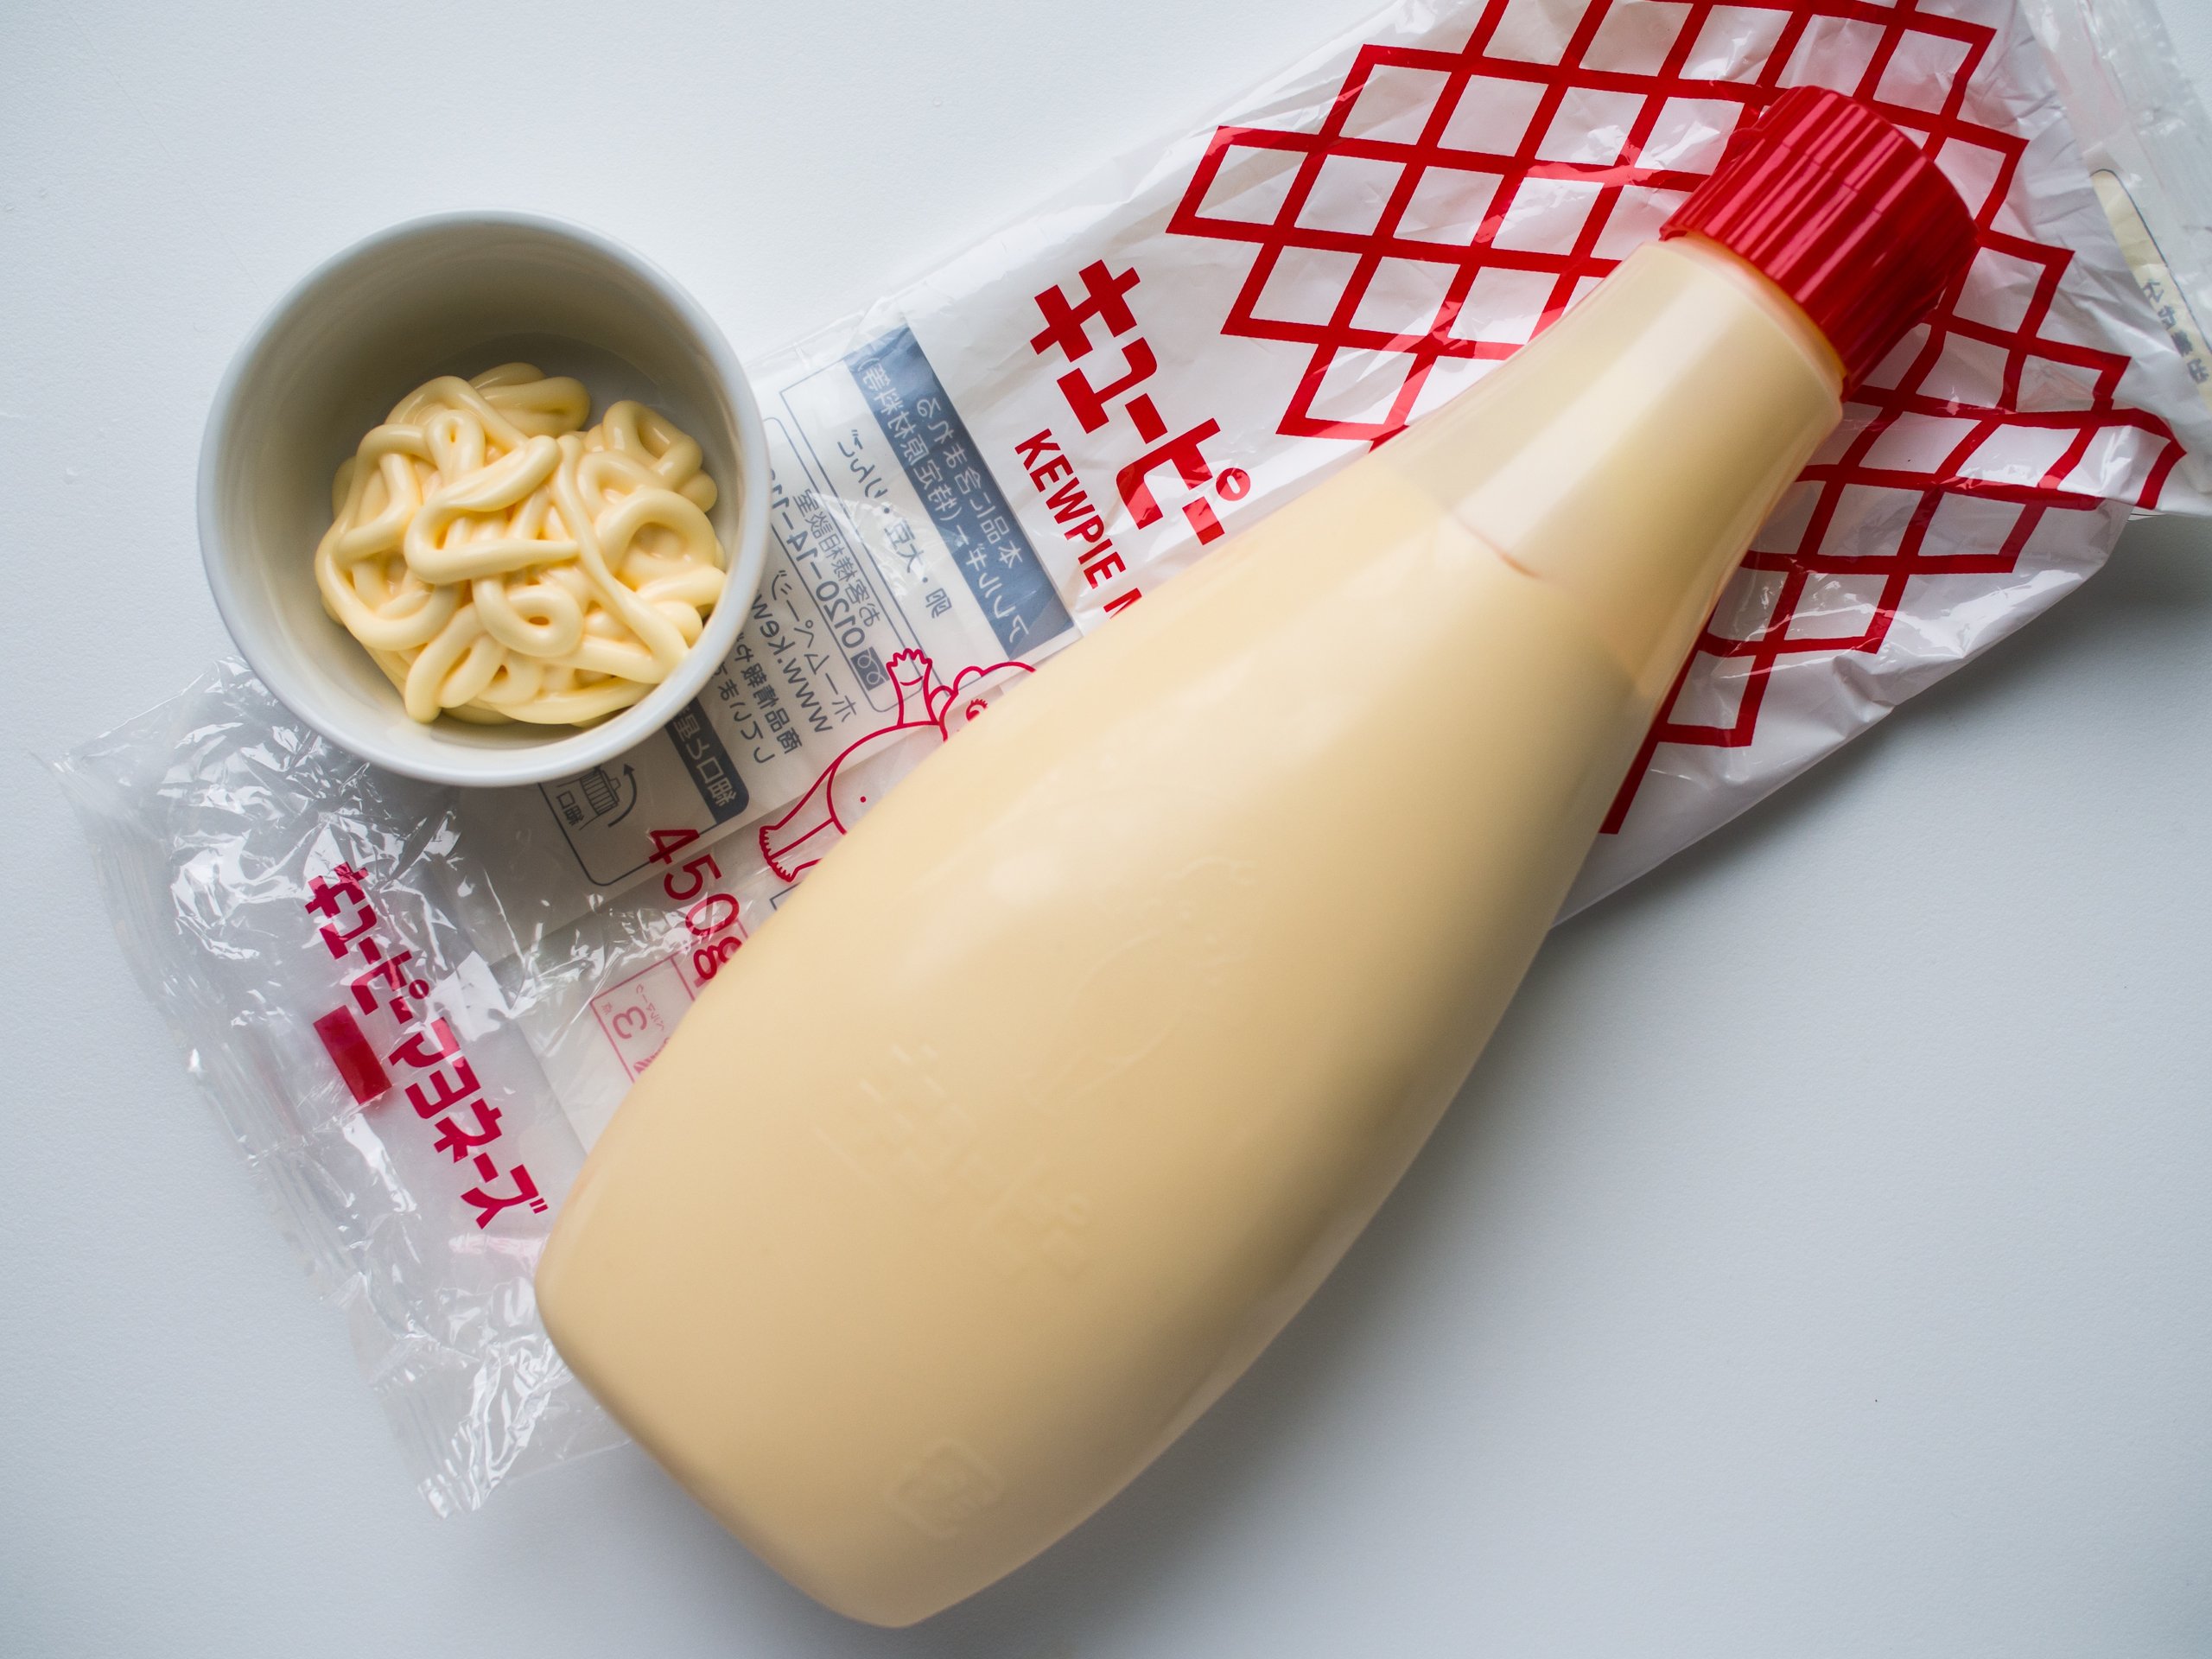 2016 0529 kewpie mayonnaise nl.jpg?resize=412,275 - Japon : Kewpie Mayo Cafe, la chaine de restaurants dédiés à la mayonnaise